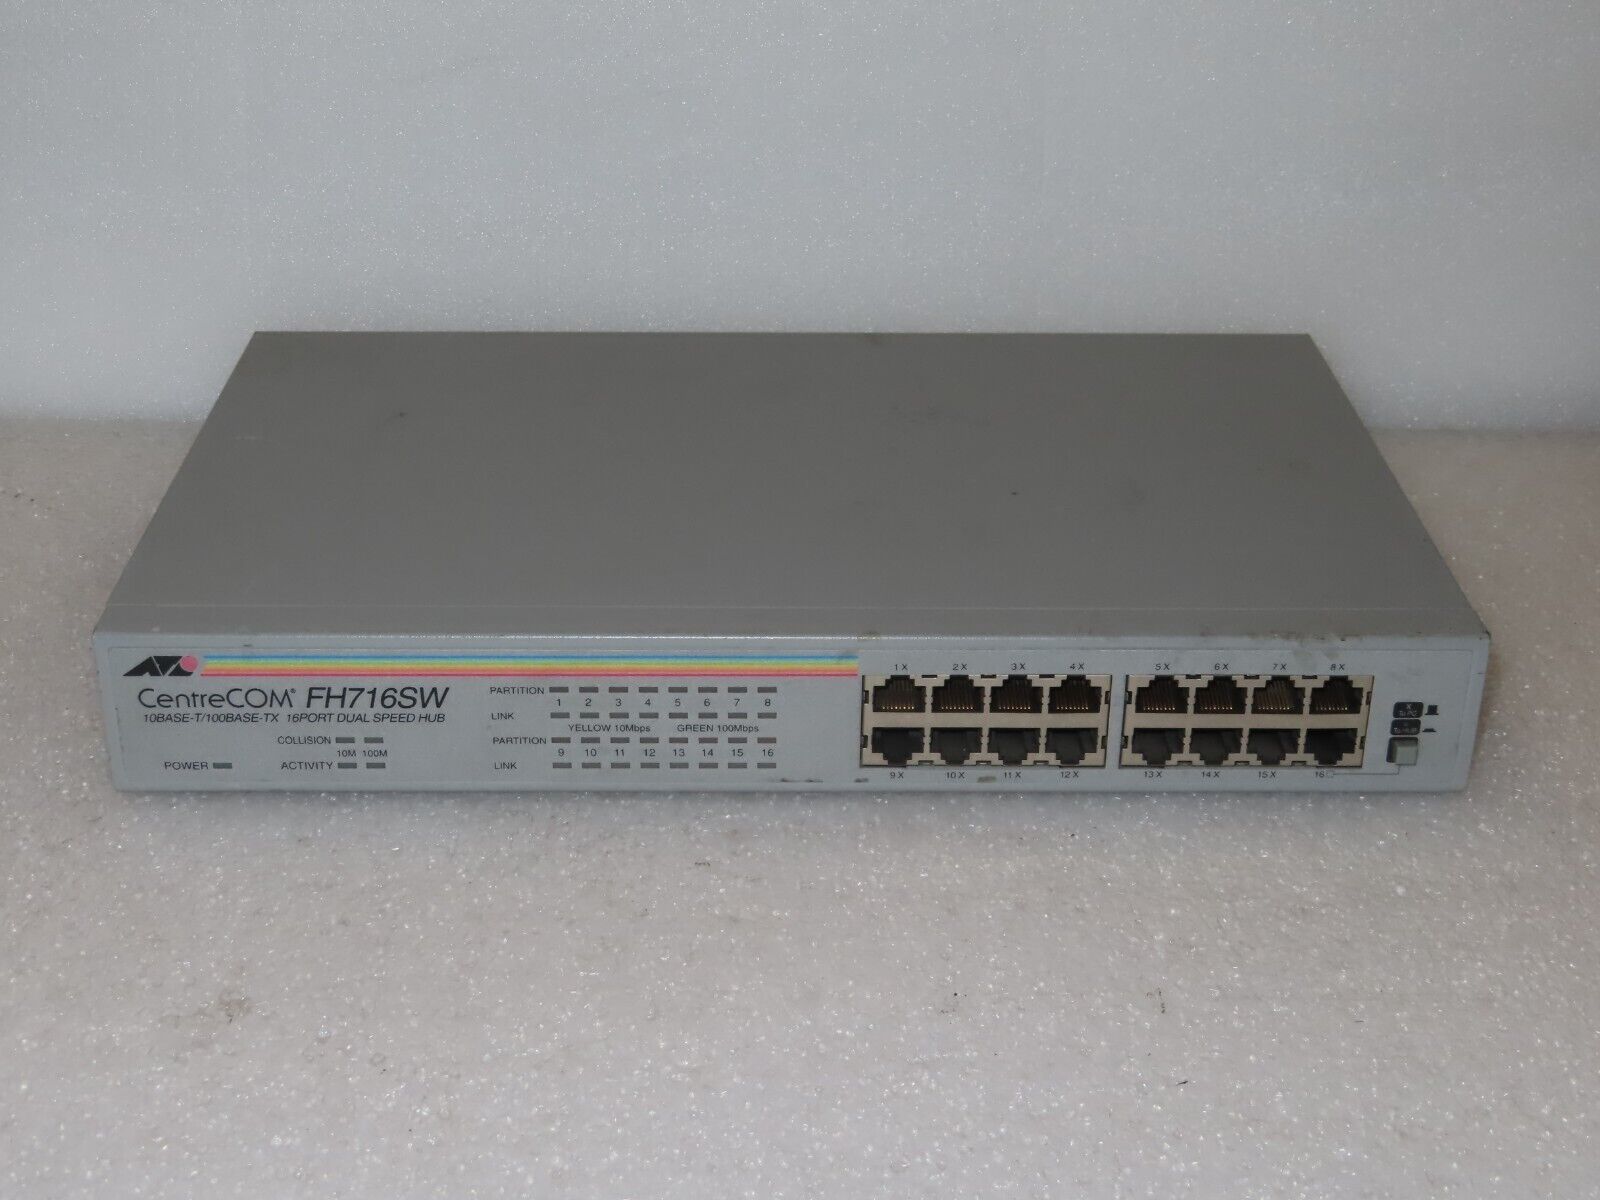 Vintage ATI Allied Telesyn CentreCOM FH708SW 8 Port 10Base-T 100Base-TX Hub